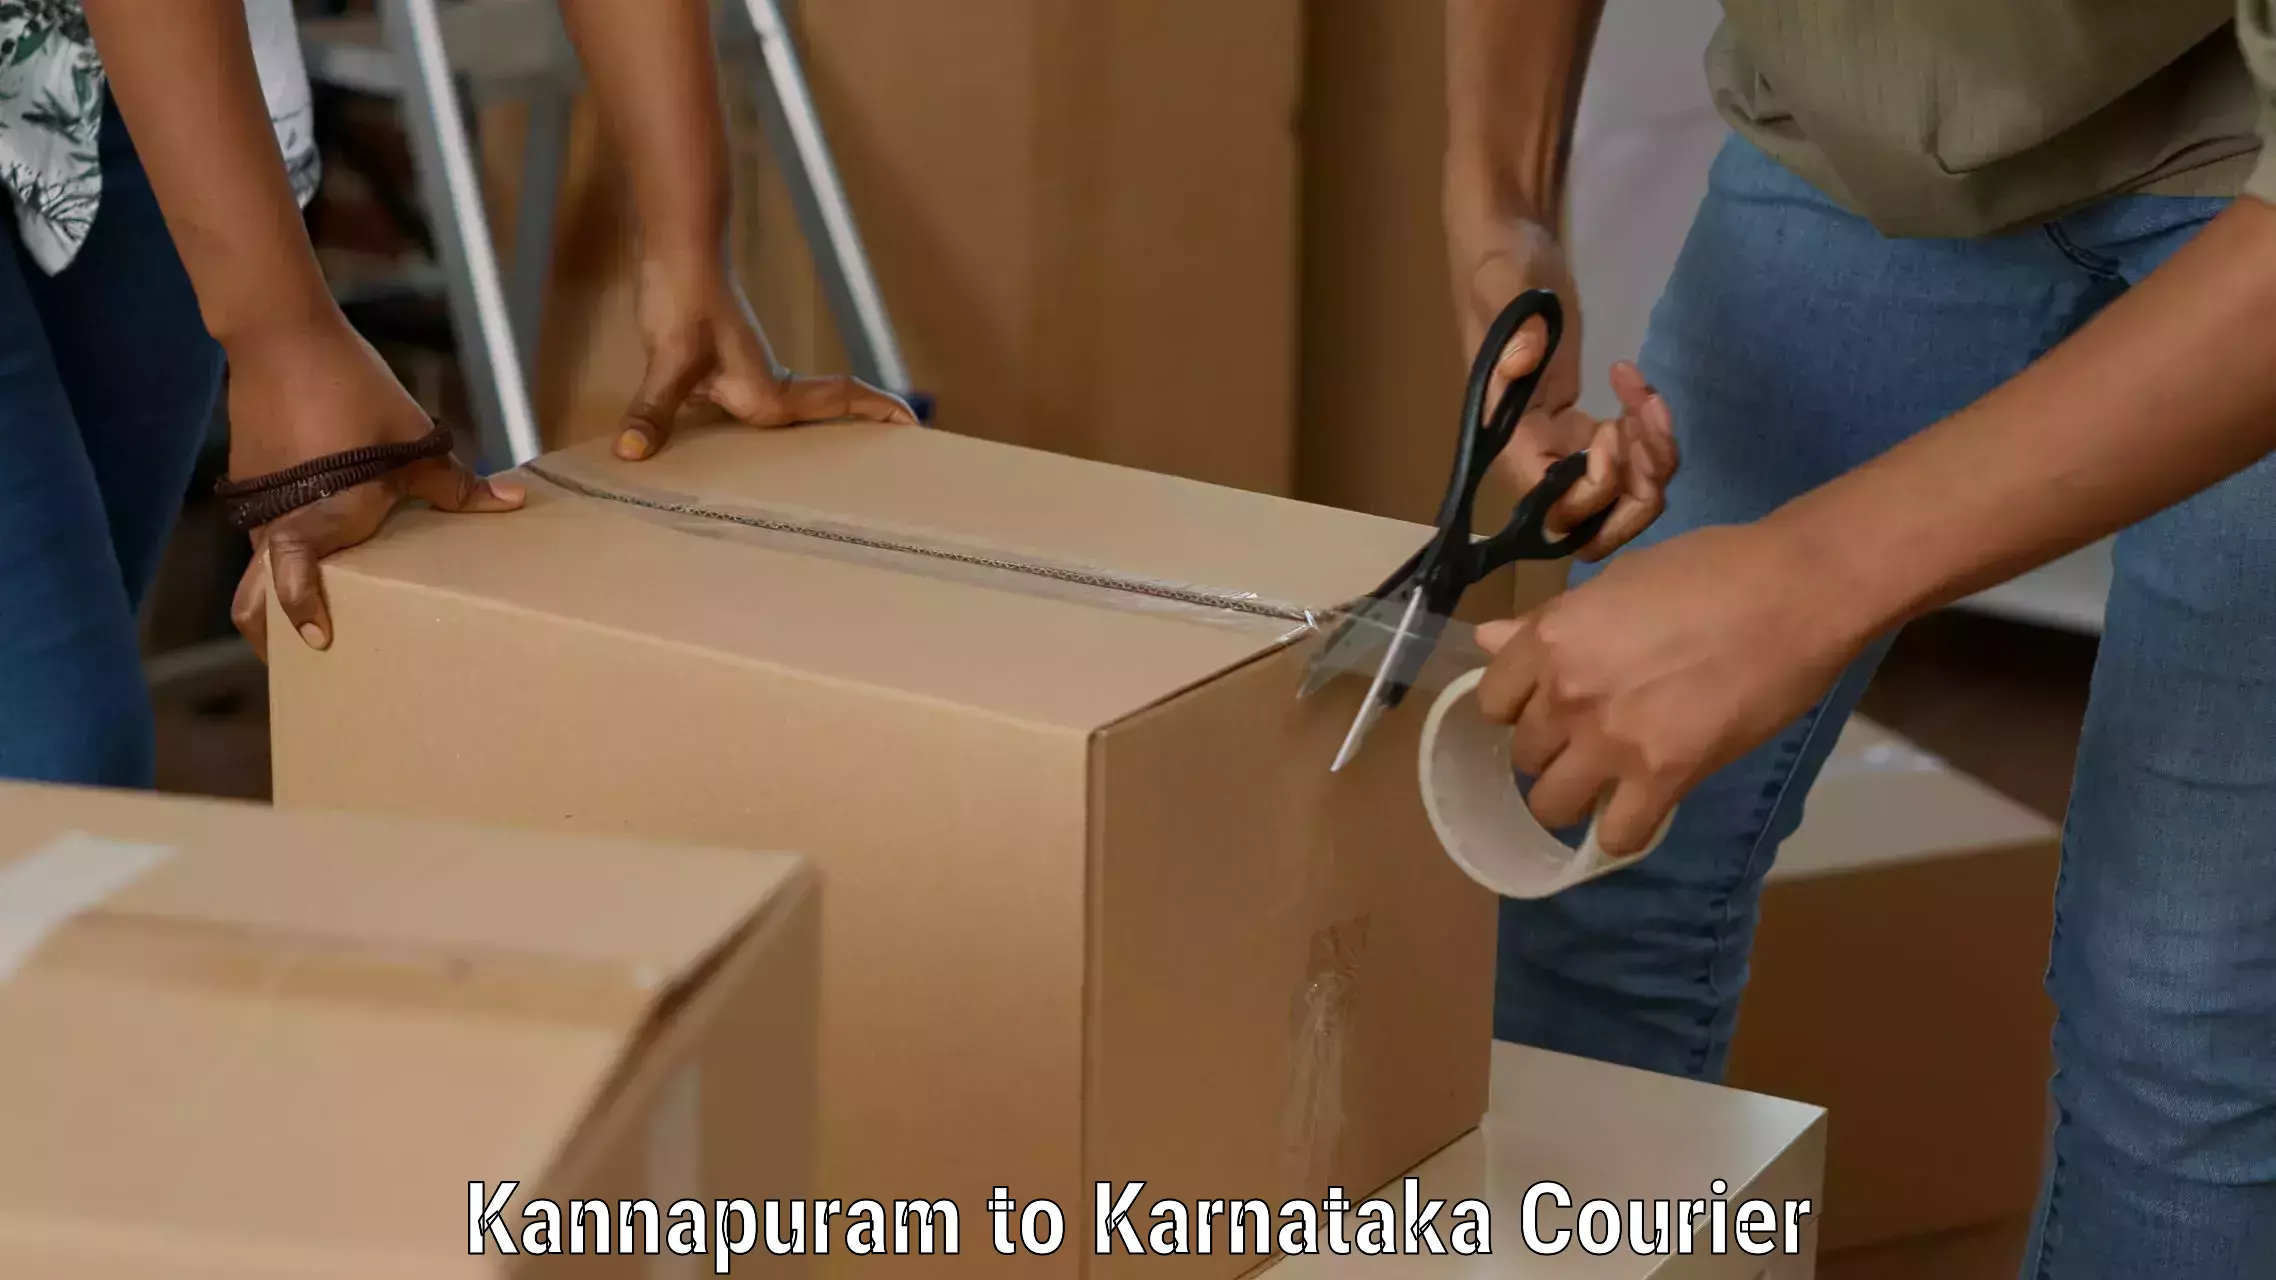 Efficient parcel service Kannapuram to Karnataka